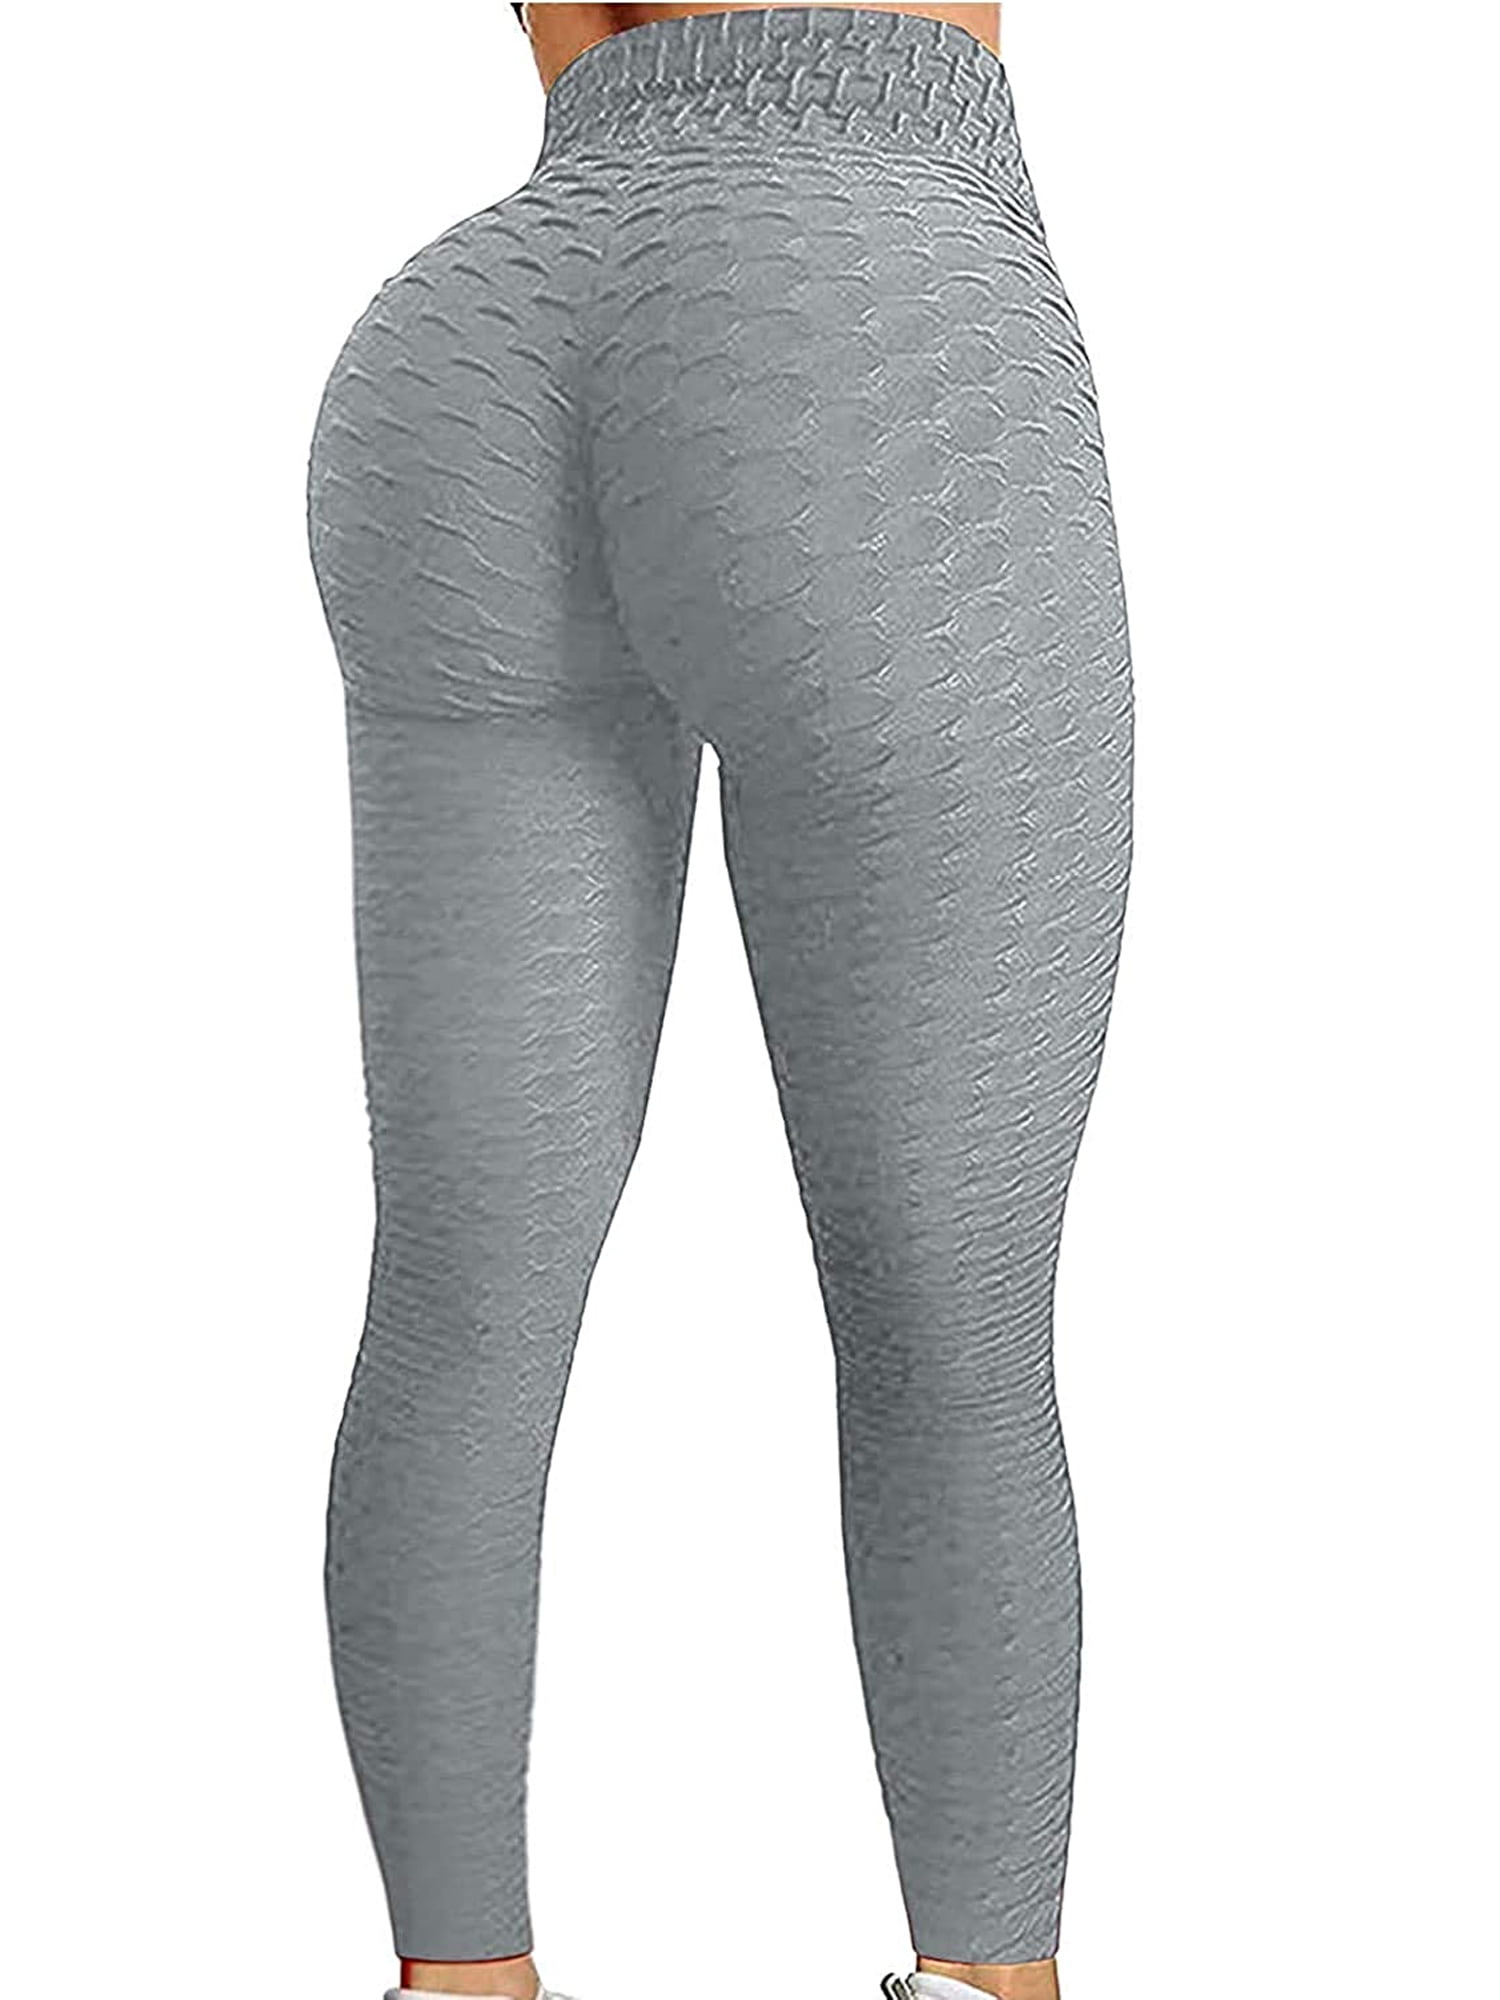 Women Yoga Gym Anti-Cellulite Leggings Fitness Solid Butt Lift Elastic Gym Pants 